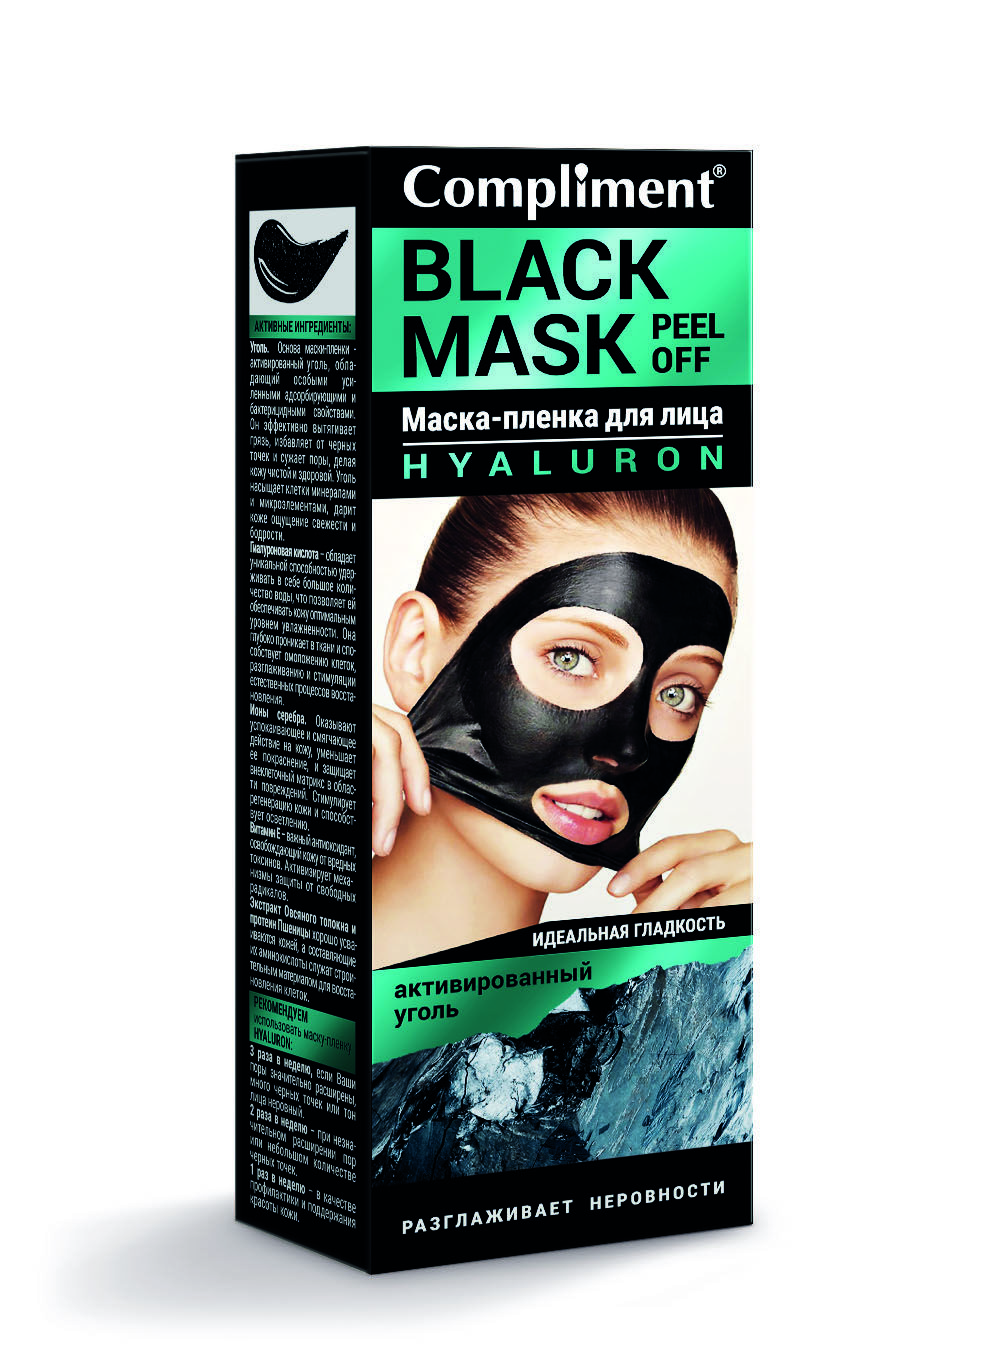 Отзывы про маску. Compliment Black Mask маска-пленка для лица Pro-Collagen 80мл 80 мл. Compliment Black Mask маска-пленка для лица Pro-Collagen 80мл. Compliment Black Mask маска-пленка для лица коллаген, 80 мл. Compliment Black Mask маска-пленка для лица co-Enzymes 80мл.